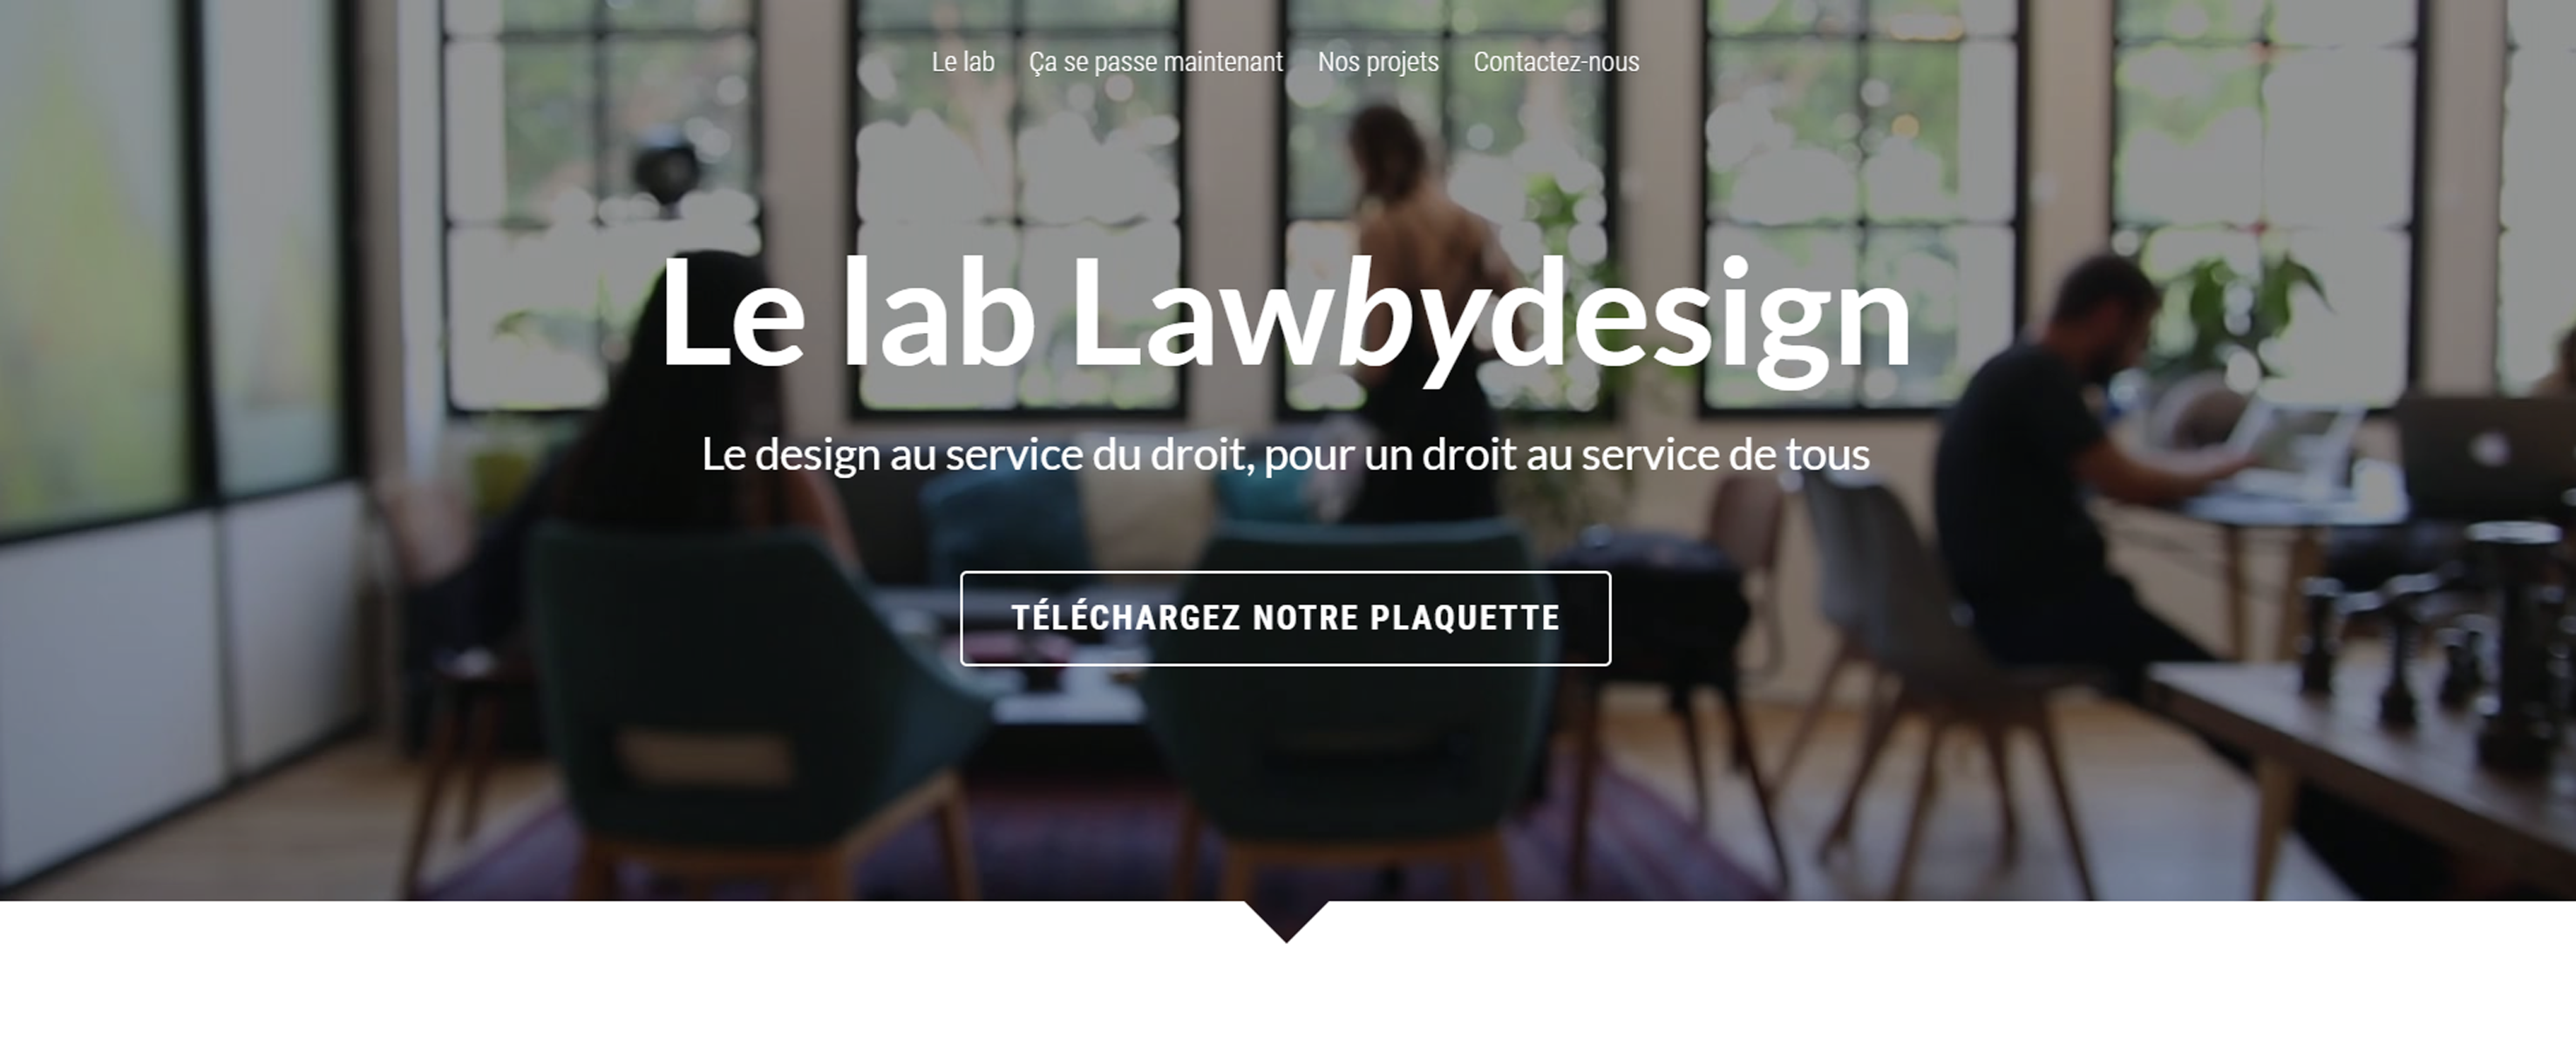 Le lab Lawbydesign